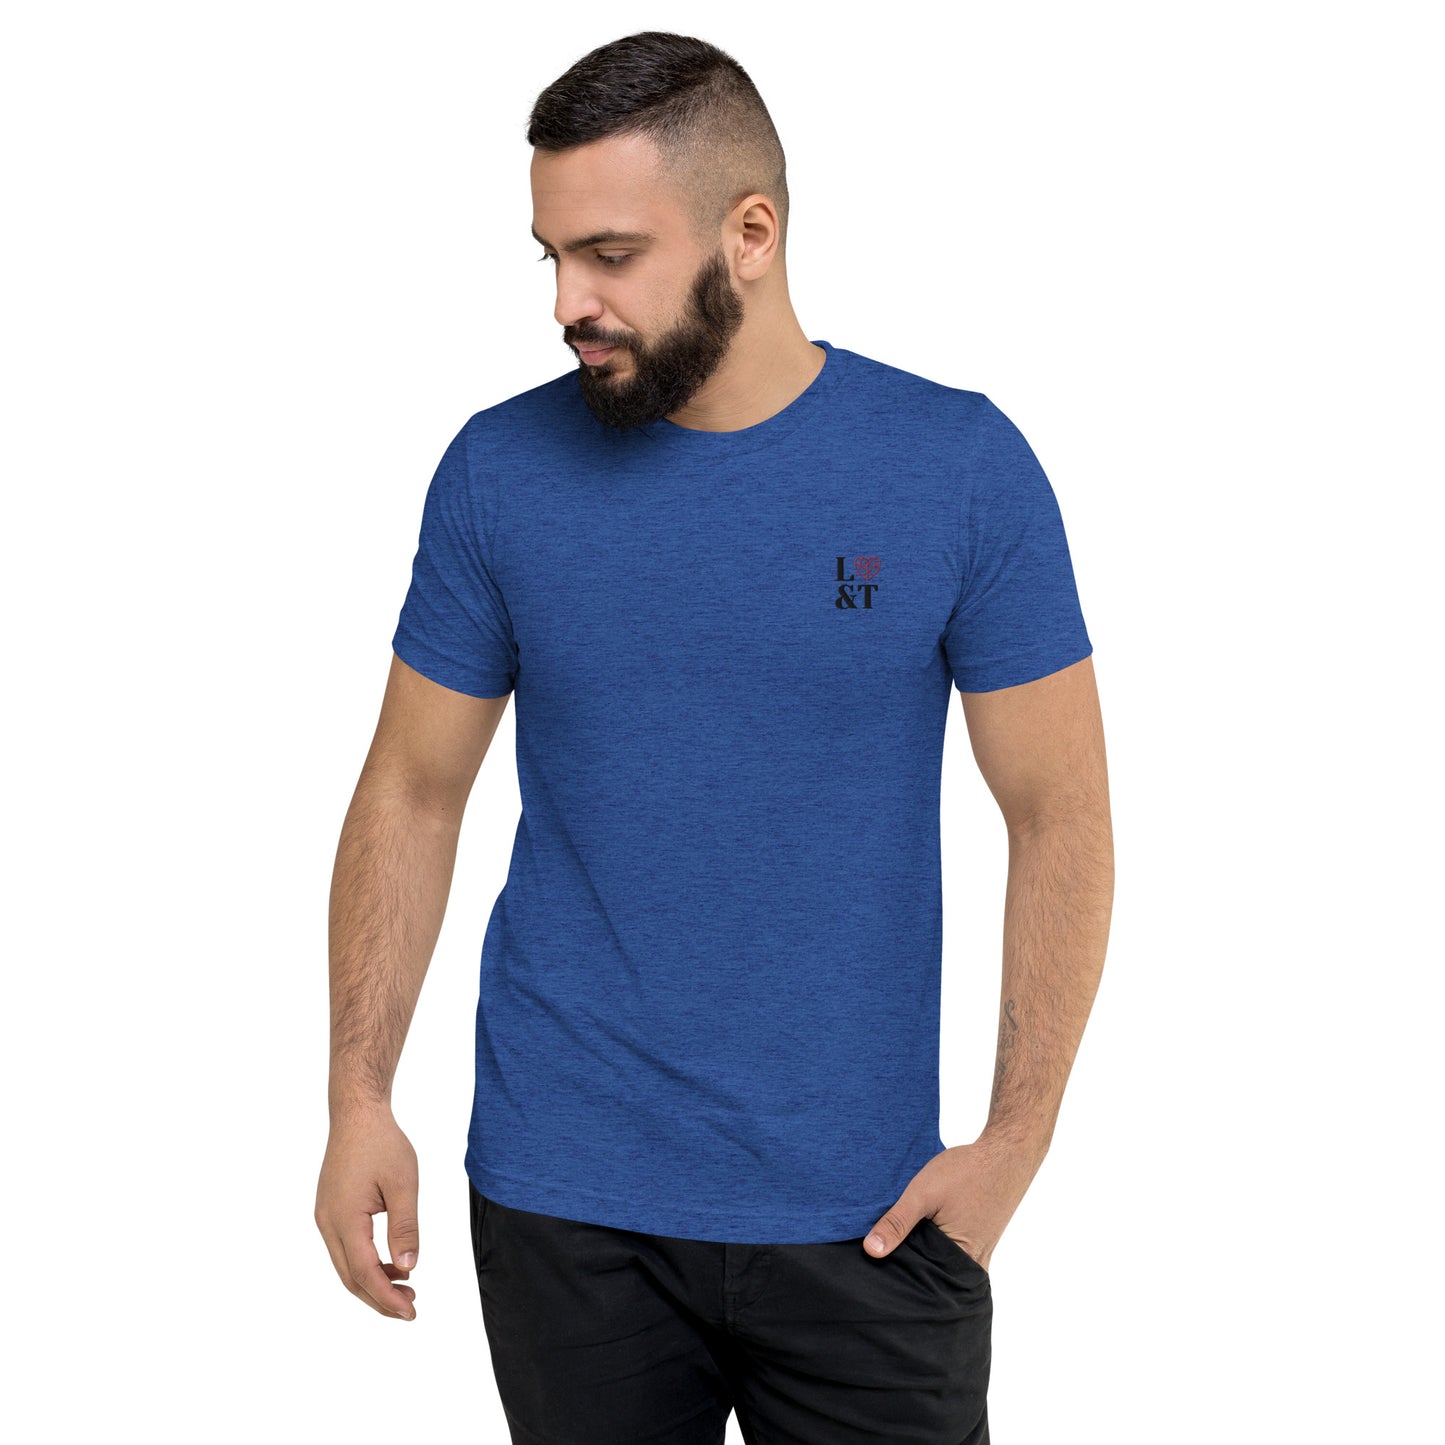 L&T Unisex Embroidered Super Soft T-Shirt